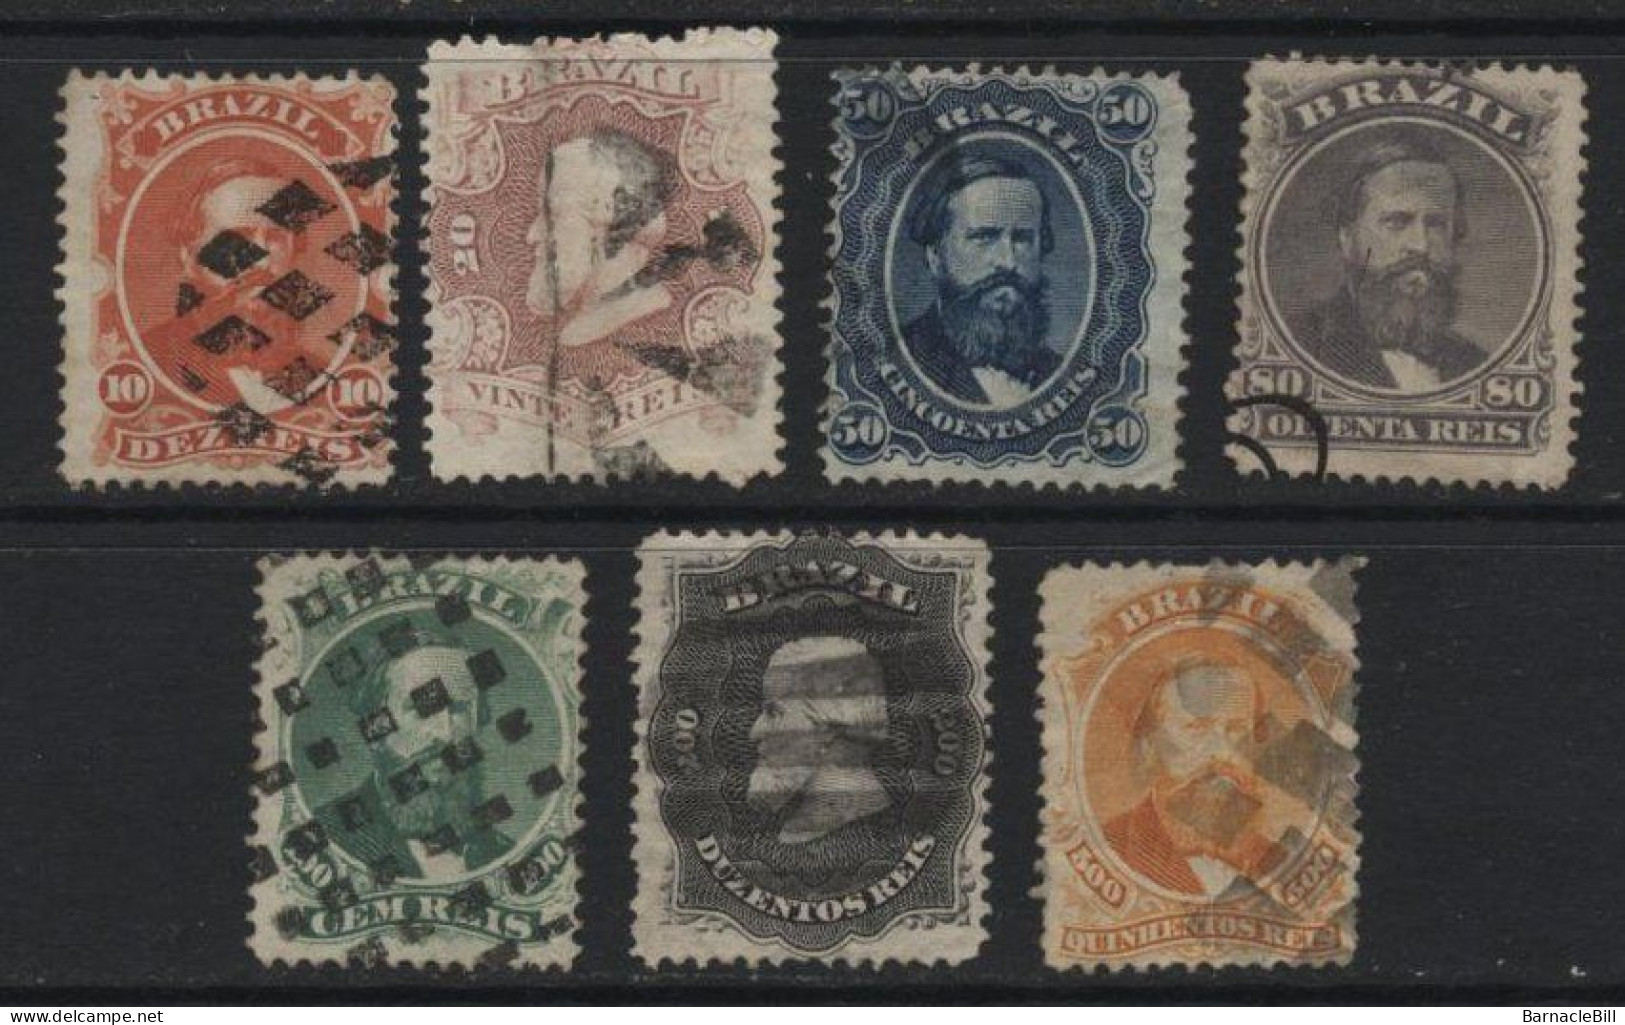 Brazil (37) 1866 Emperor Dom Pedro II Set. Used. Hinged. - Used Stamps